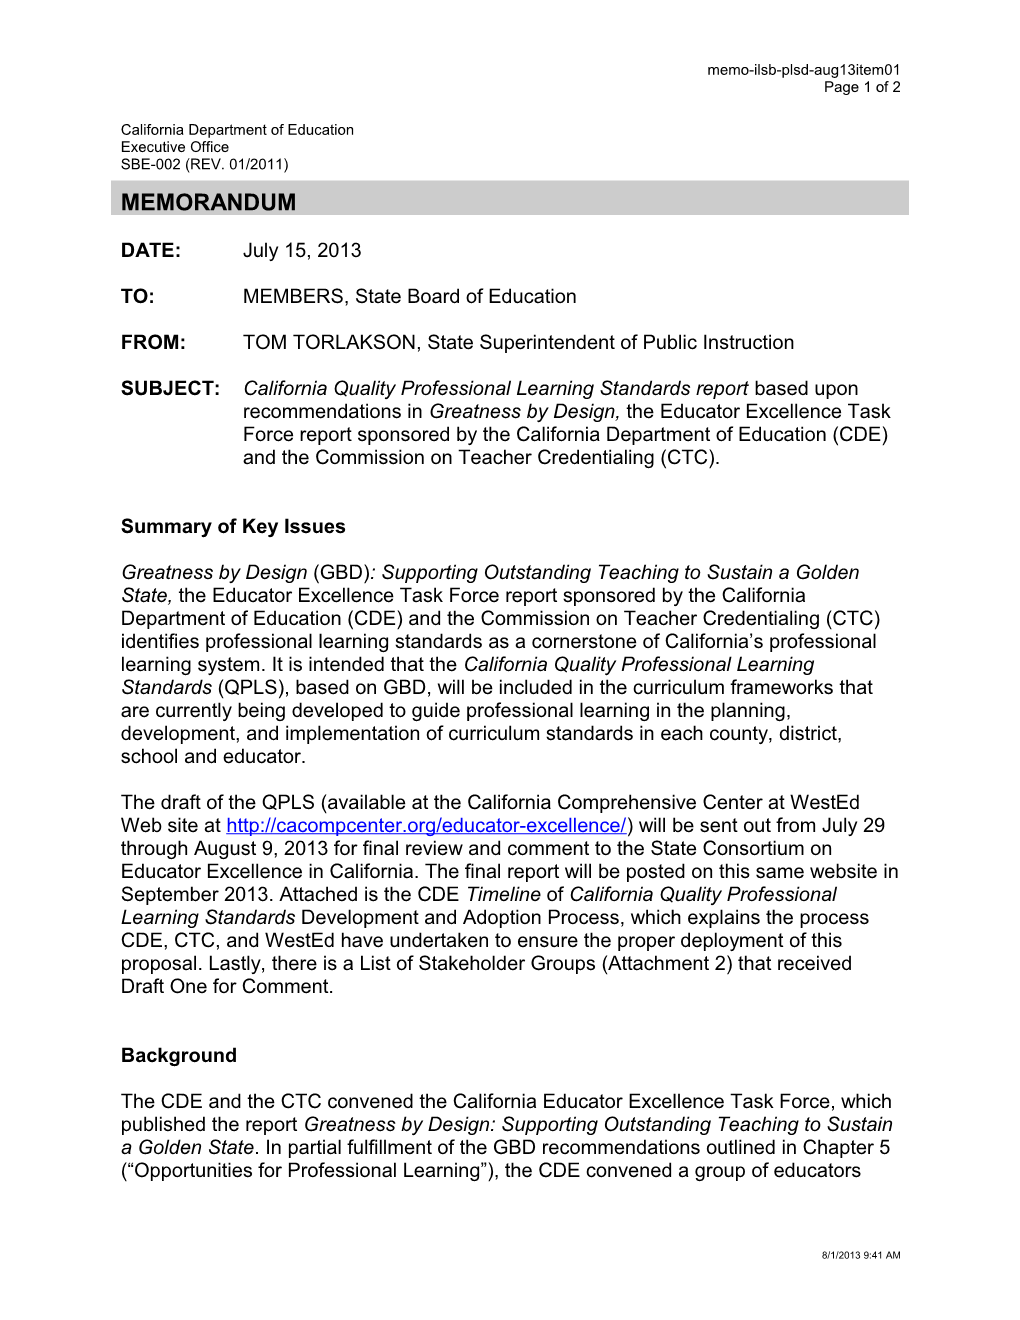 August 2013 Memorandum ILSB PLSD Item 01 - Information Memorandum (CA State Board of Education)